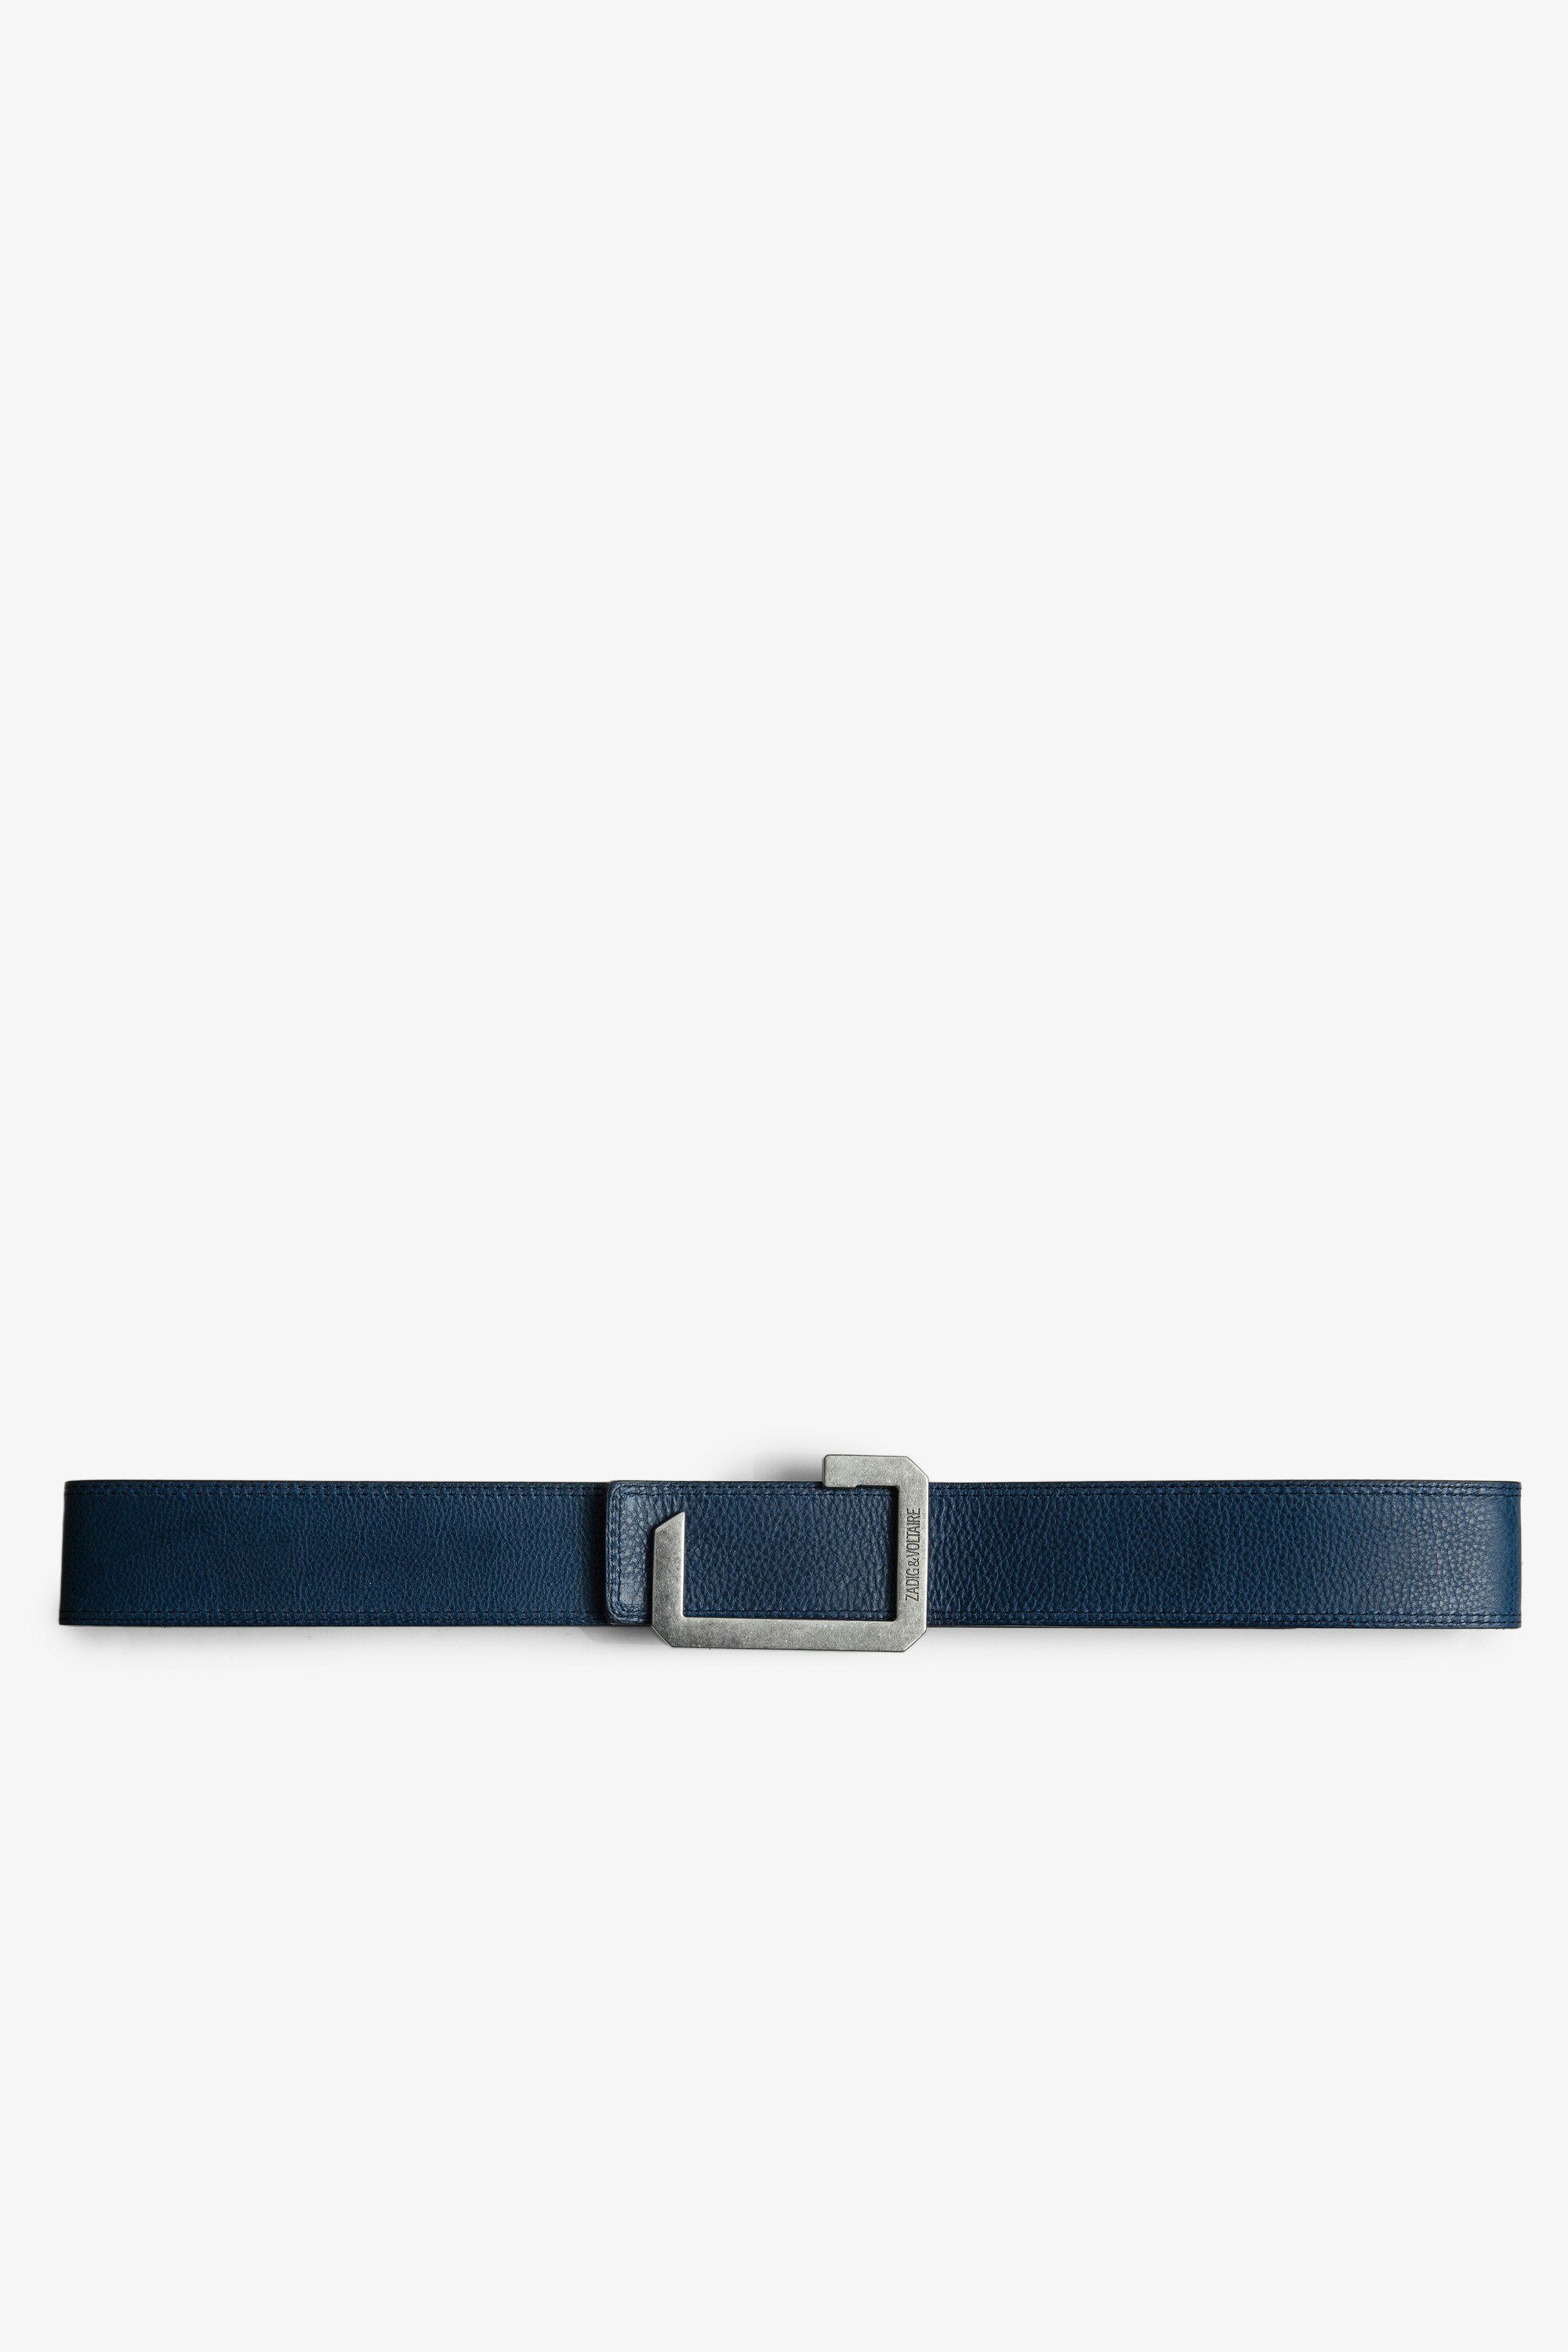 The Reversible Belt Men's reversible leather belt.